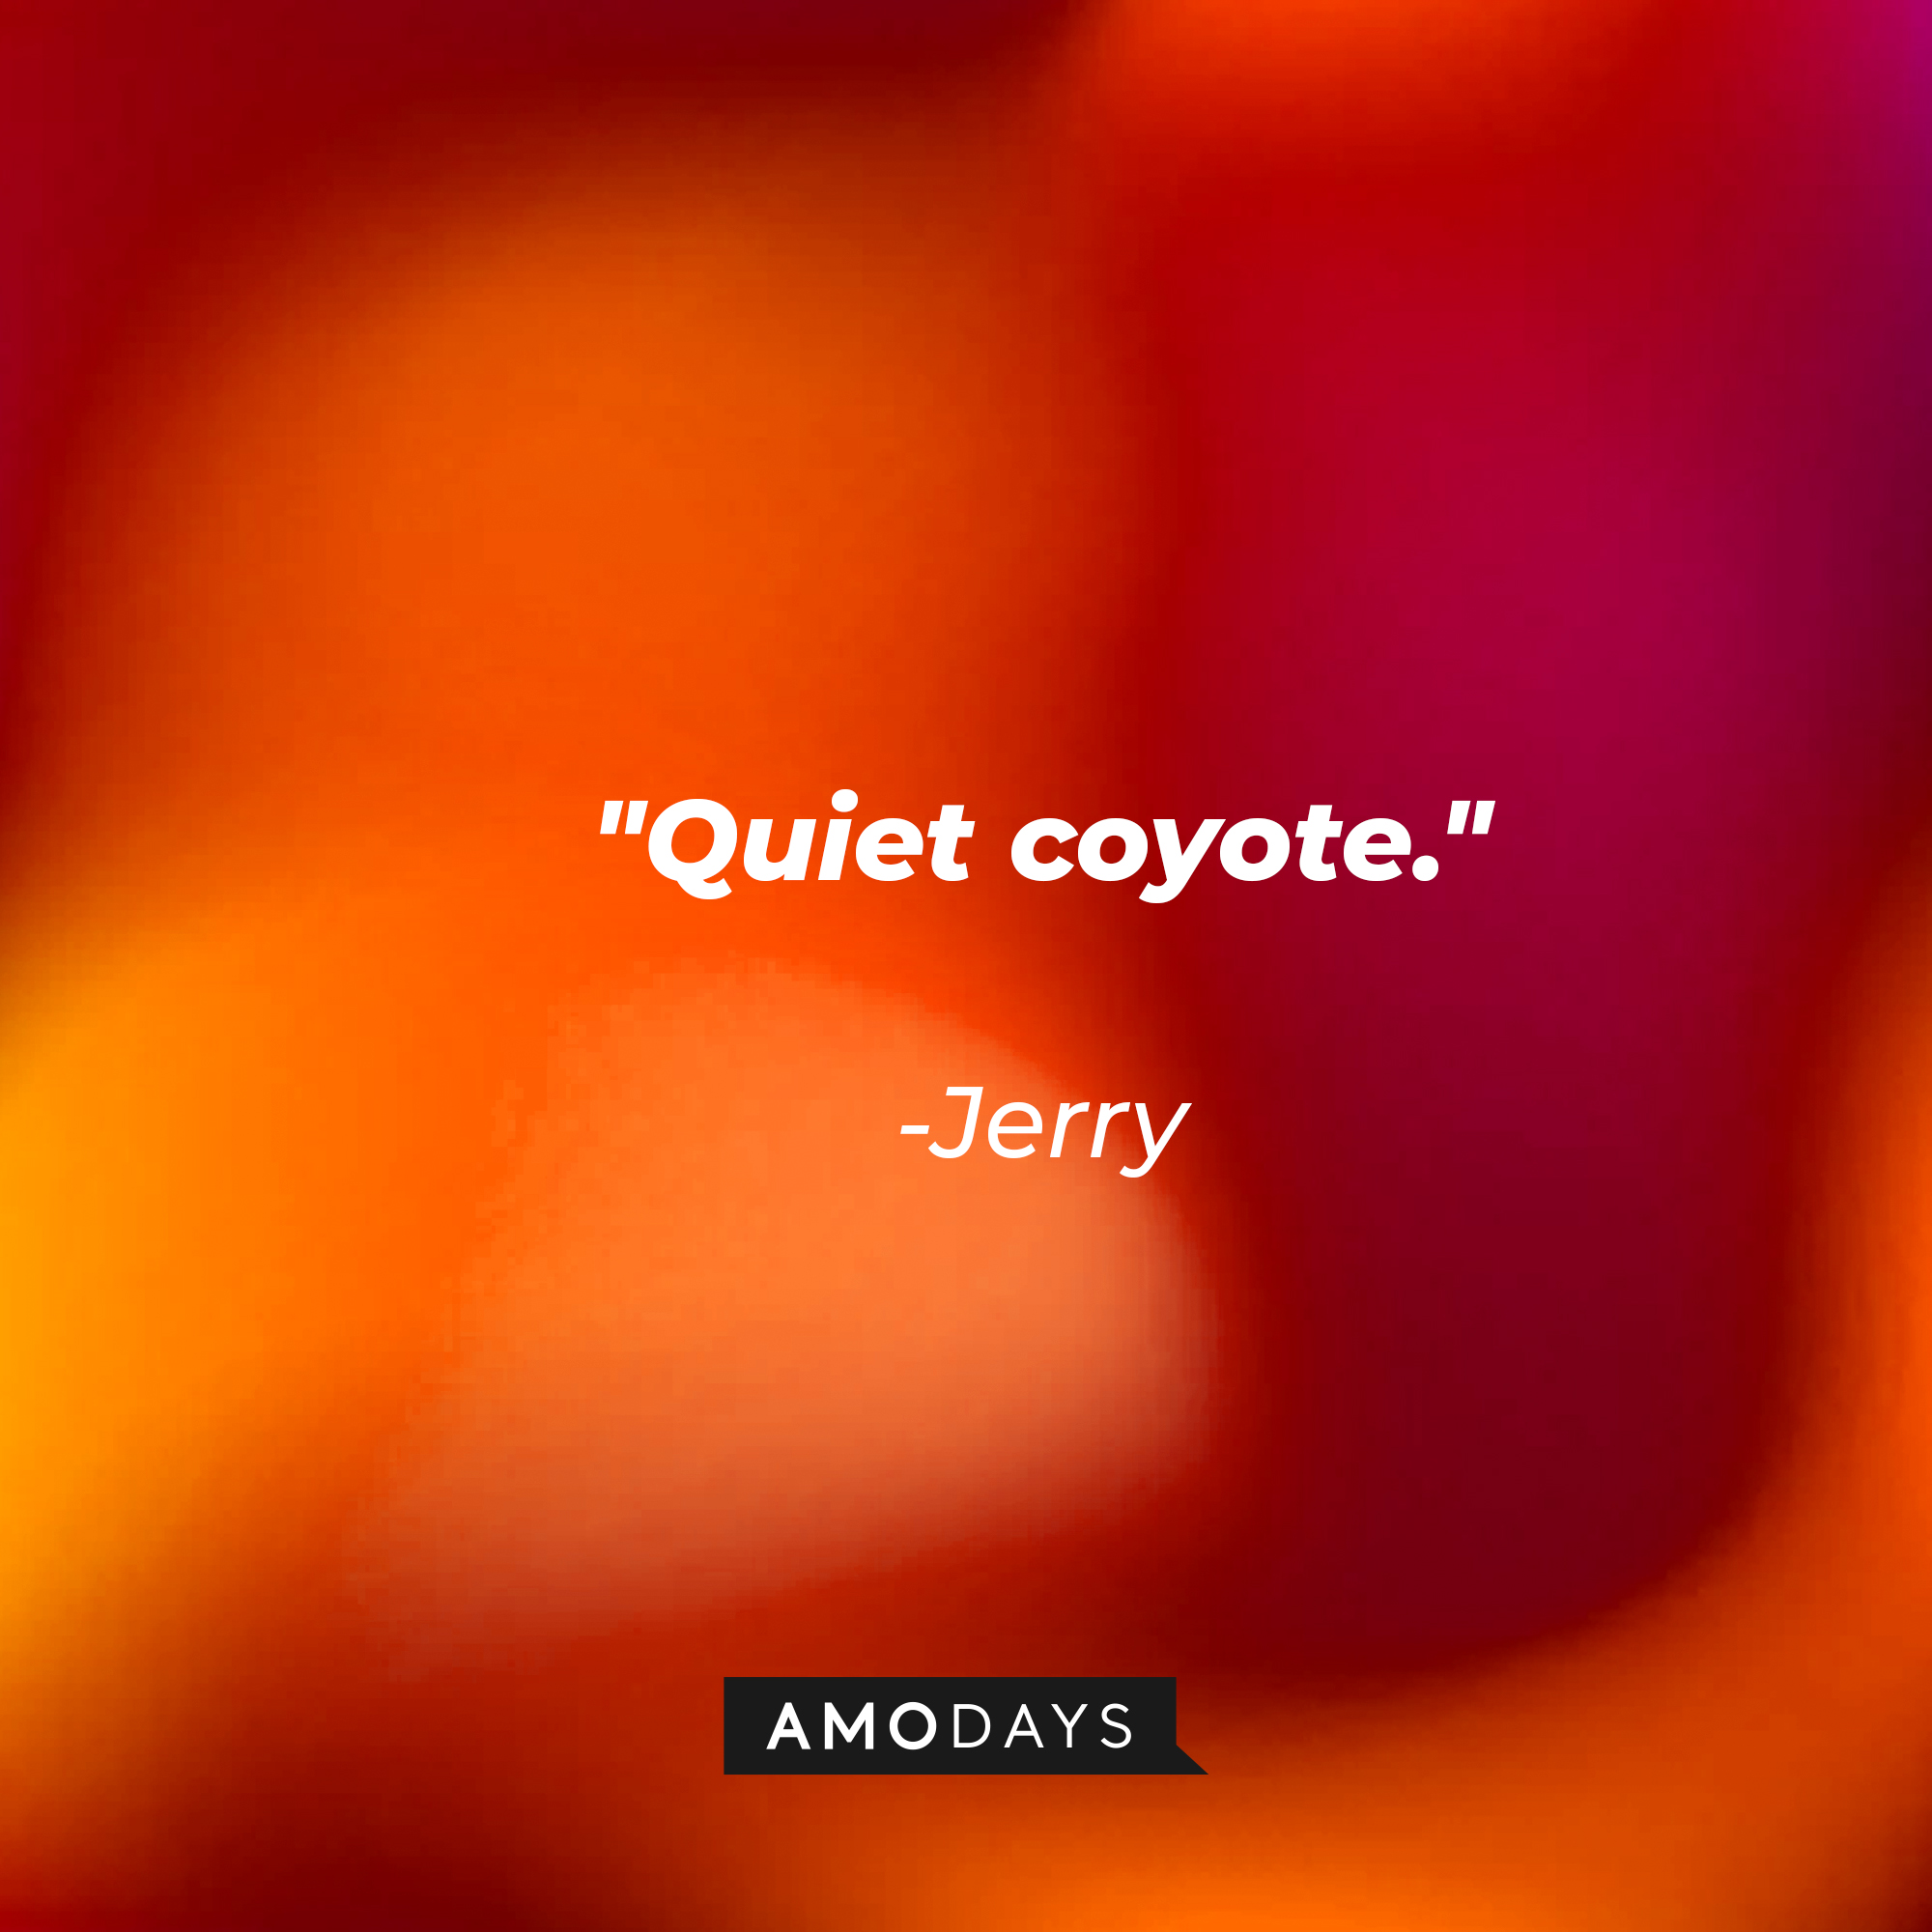 Jerry's quote: "Quiet coyote." | Source: youtube.com/pixar